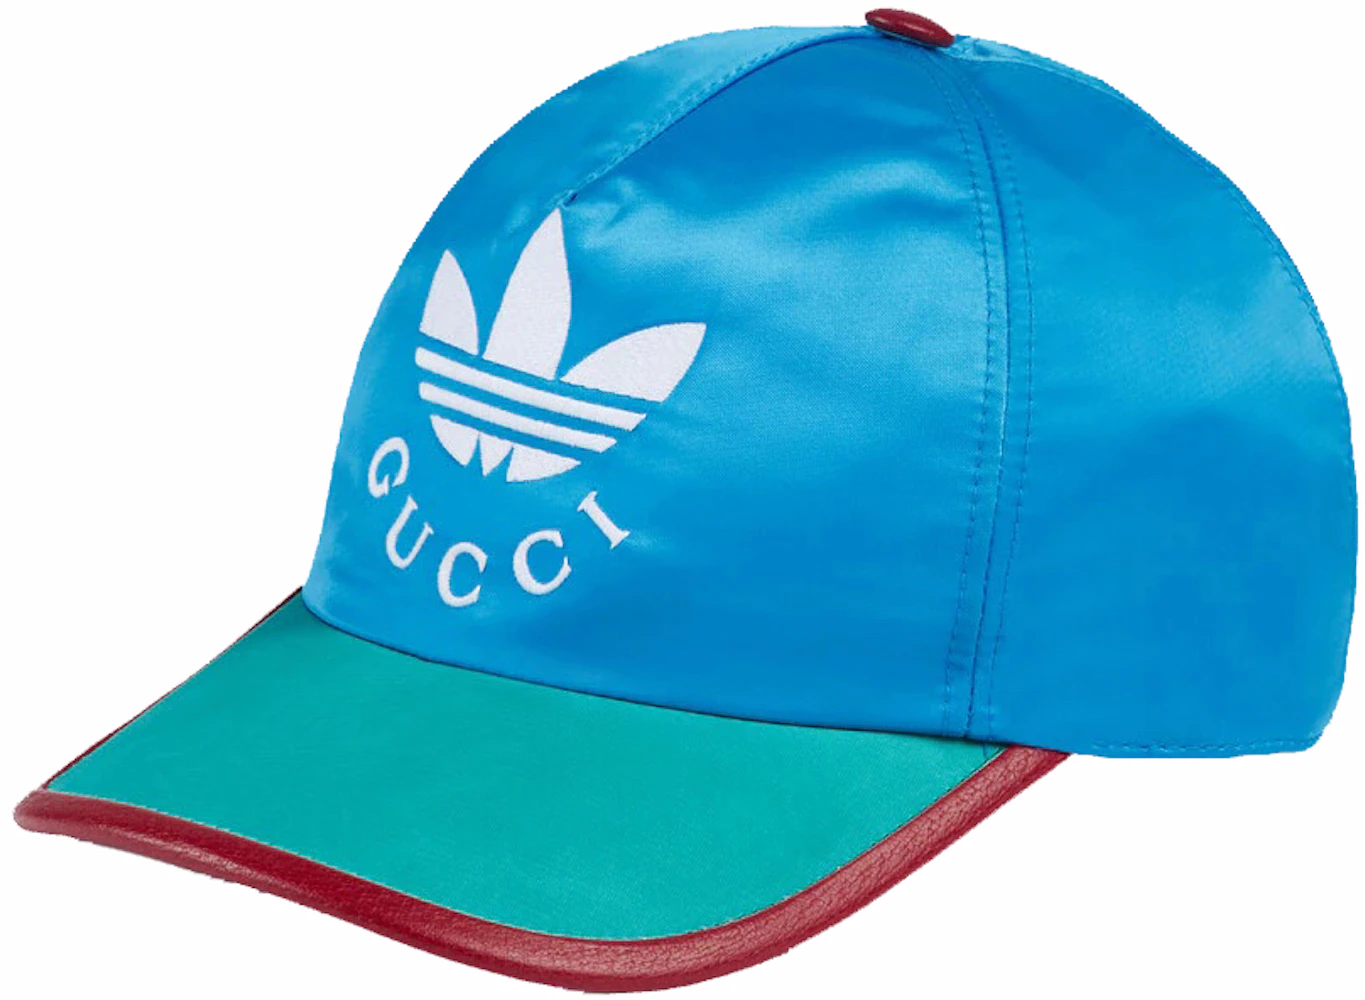 Gucci x Adidas Baseball Cap IA9087 Size S-M